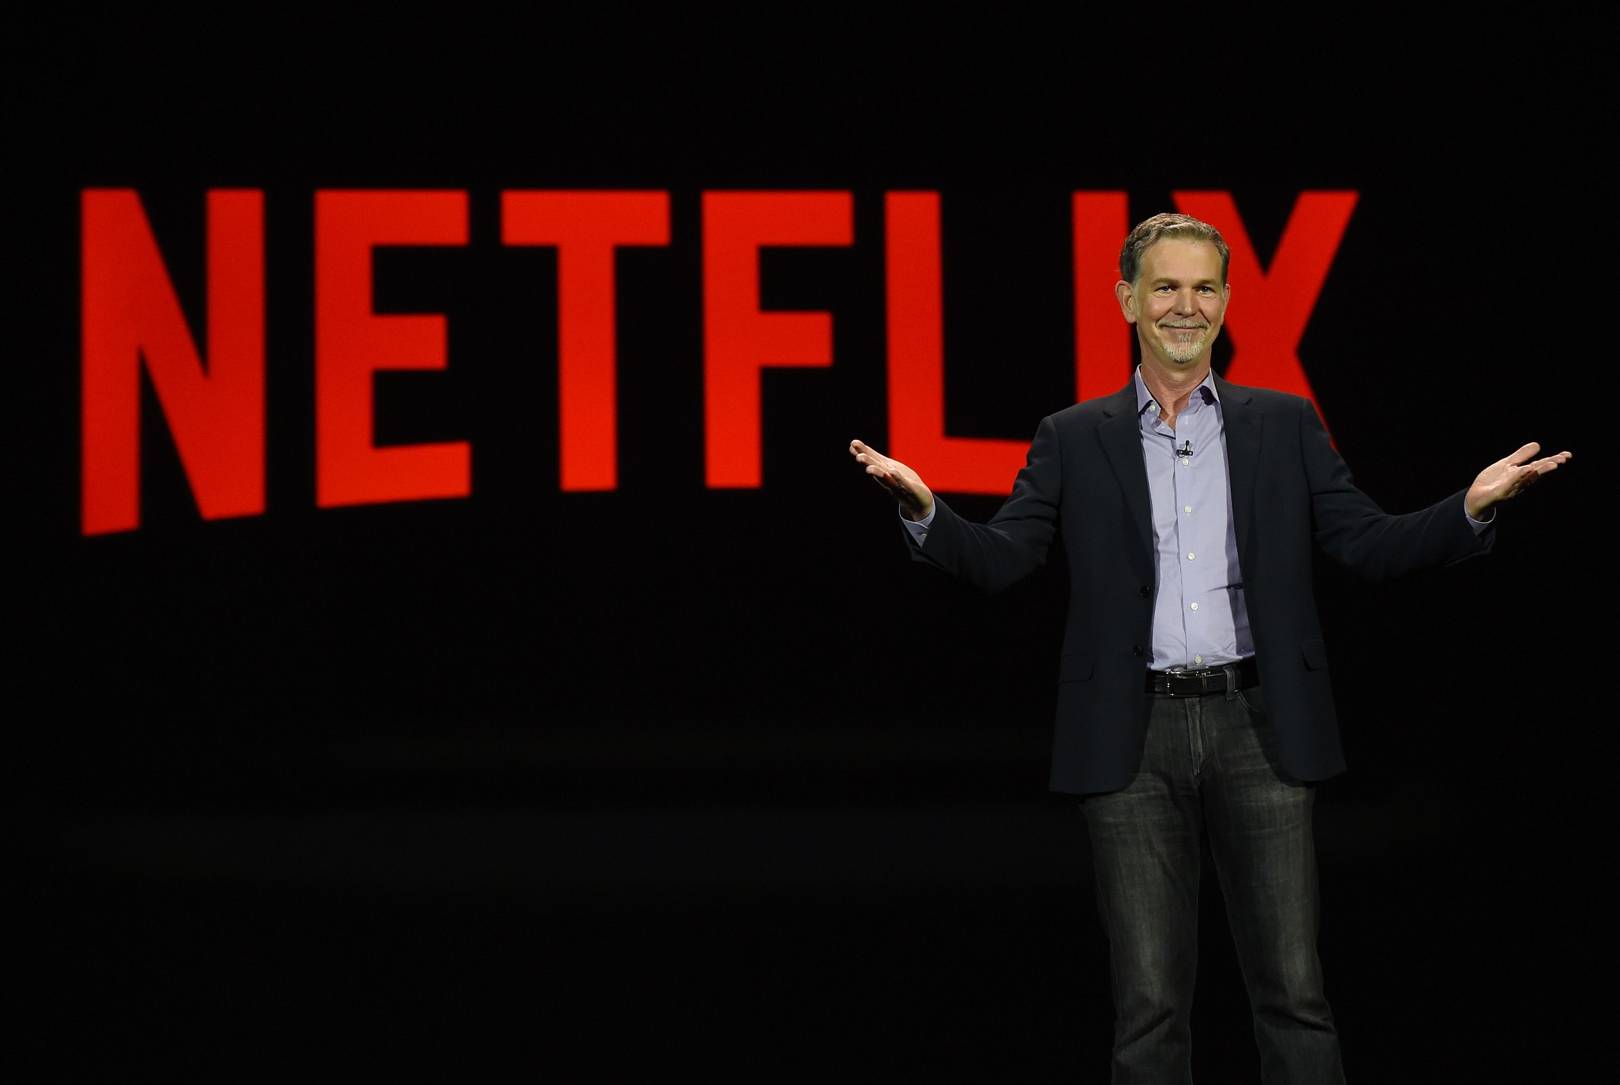 Netflix profits up 56% as original content splurge pays off